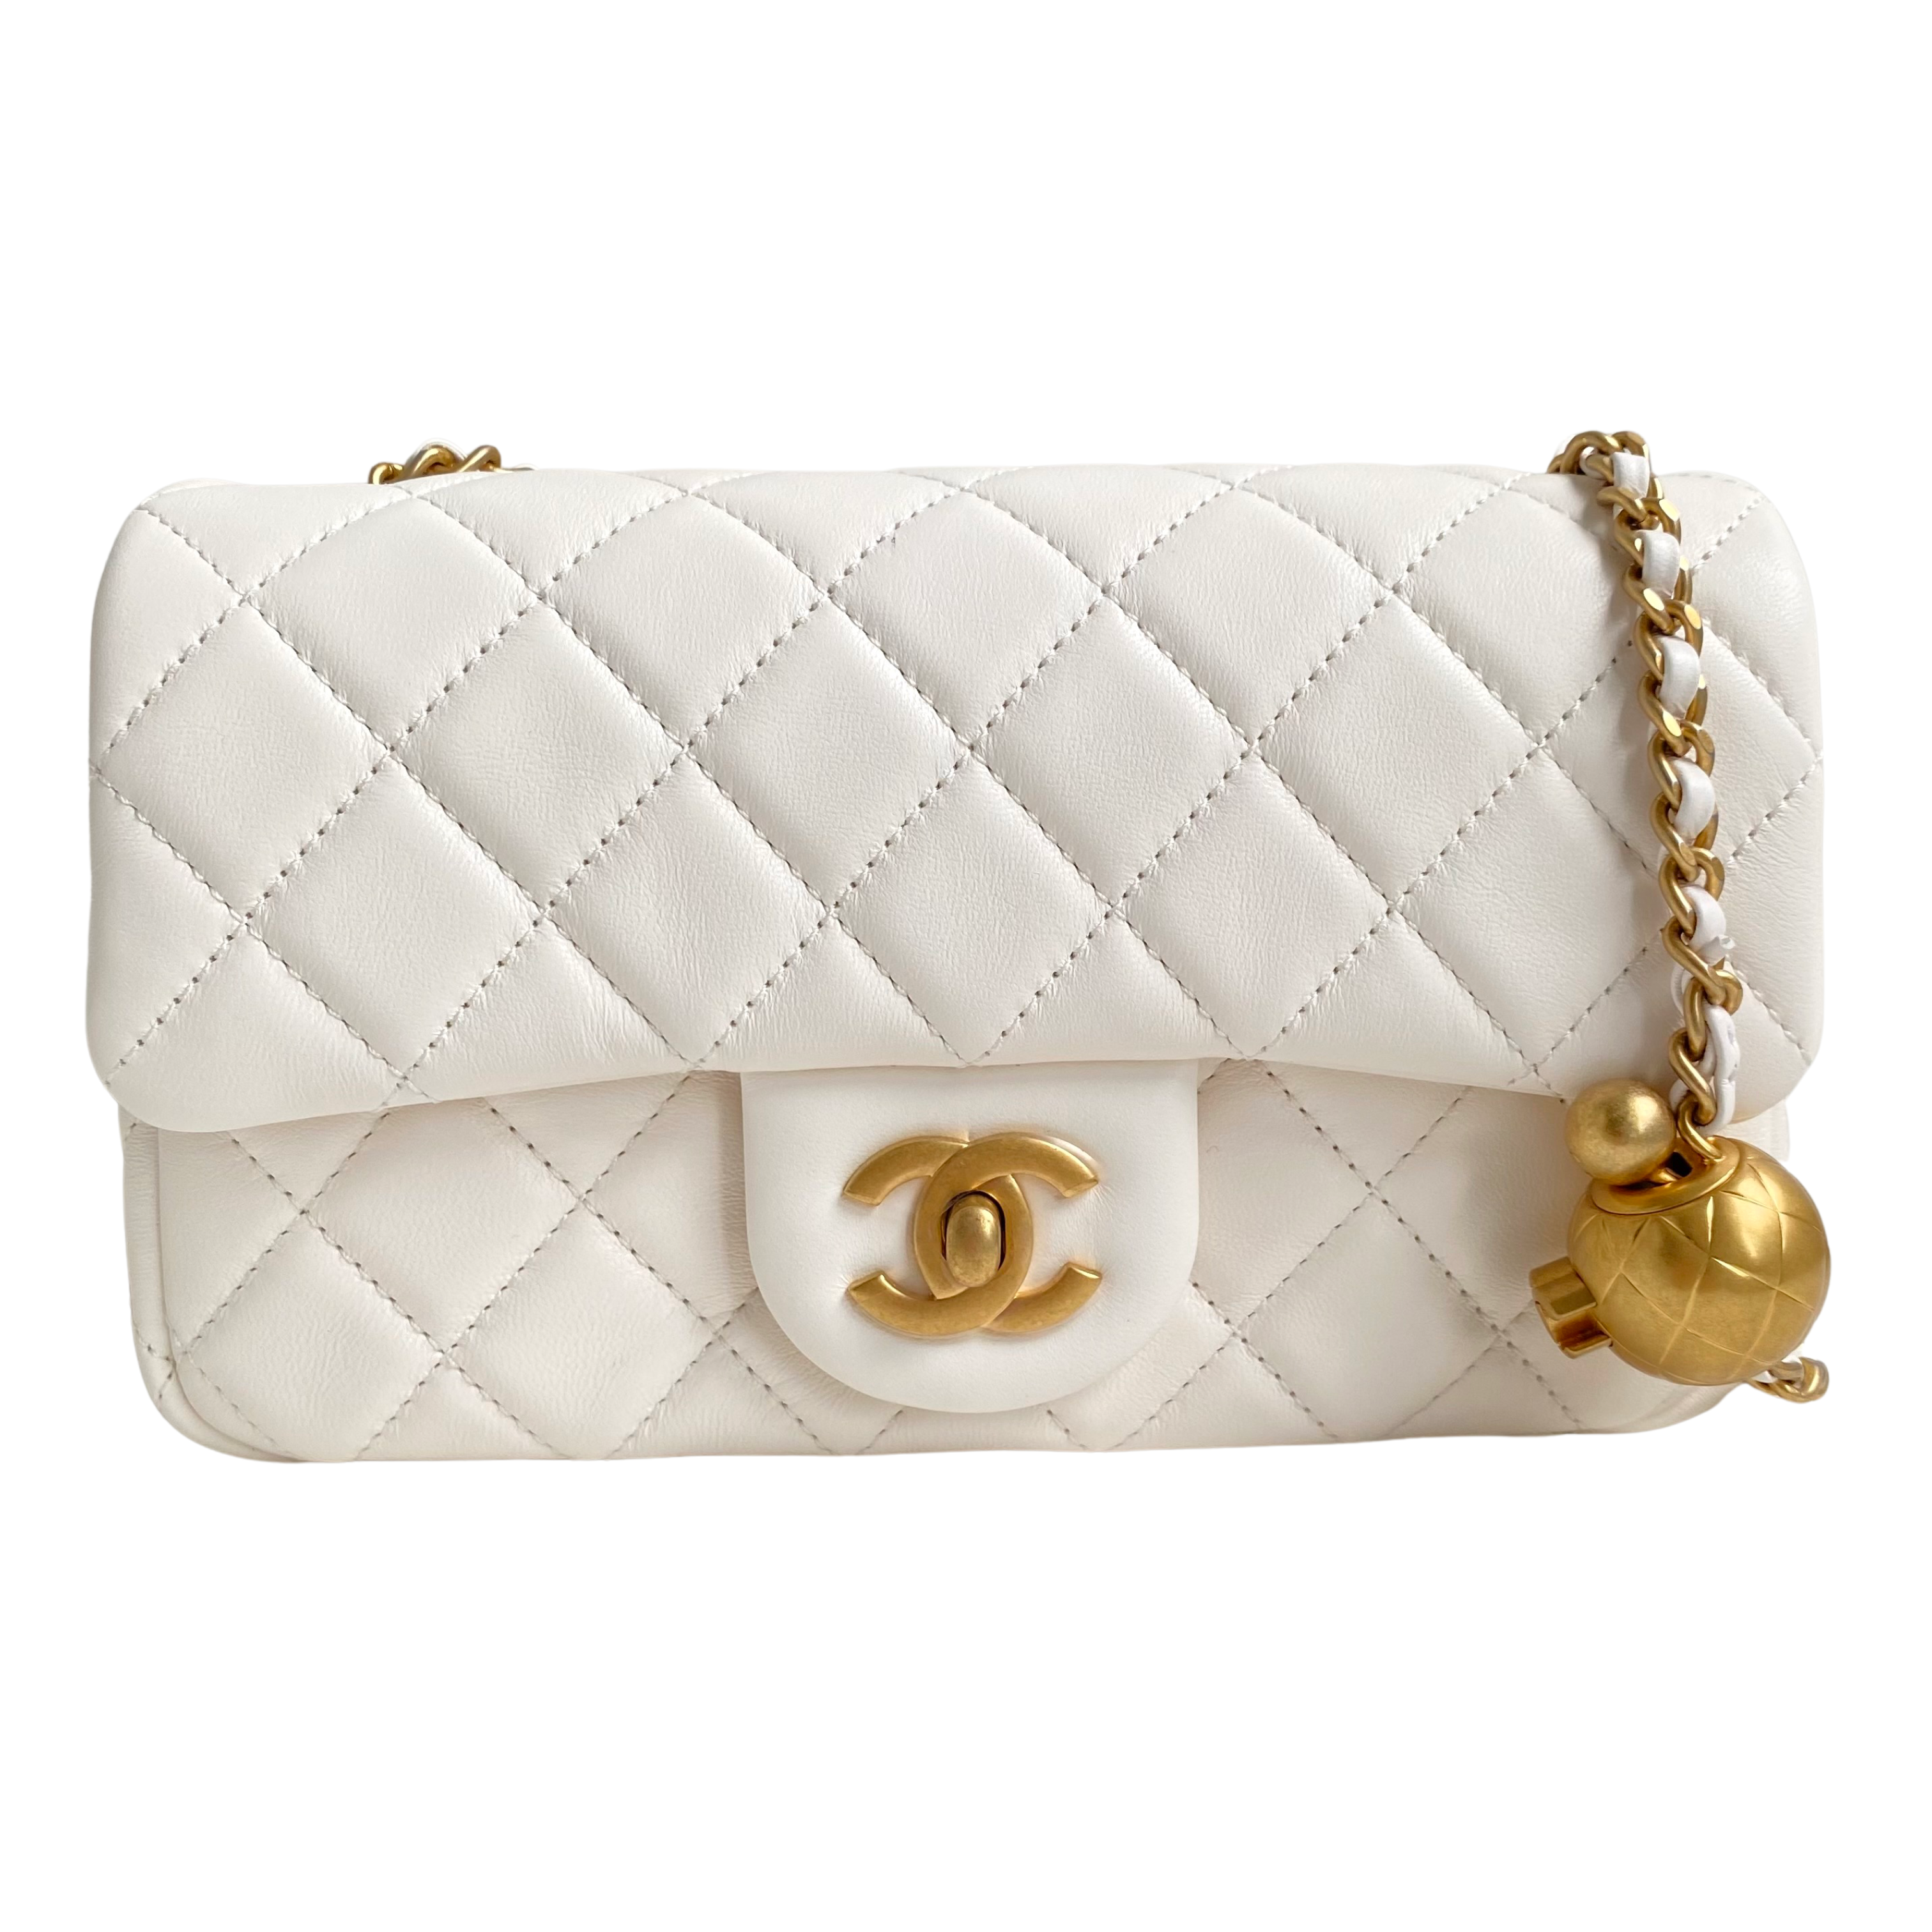 Chanel Handbags 7Pc Combo